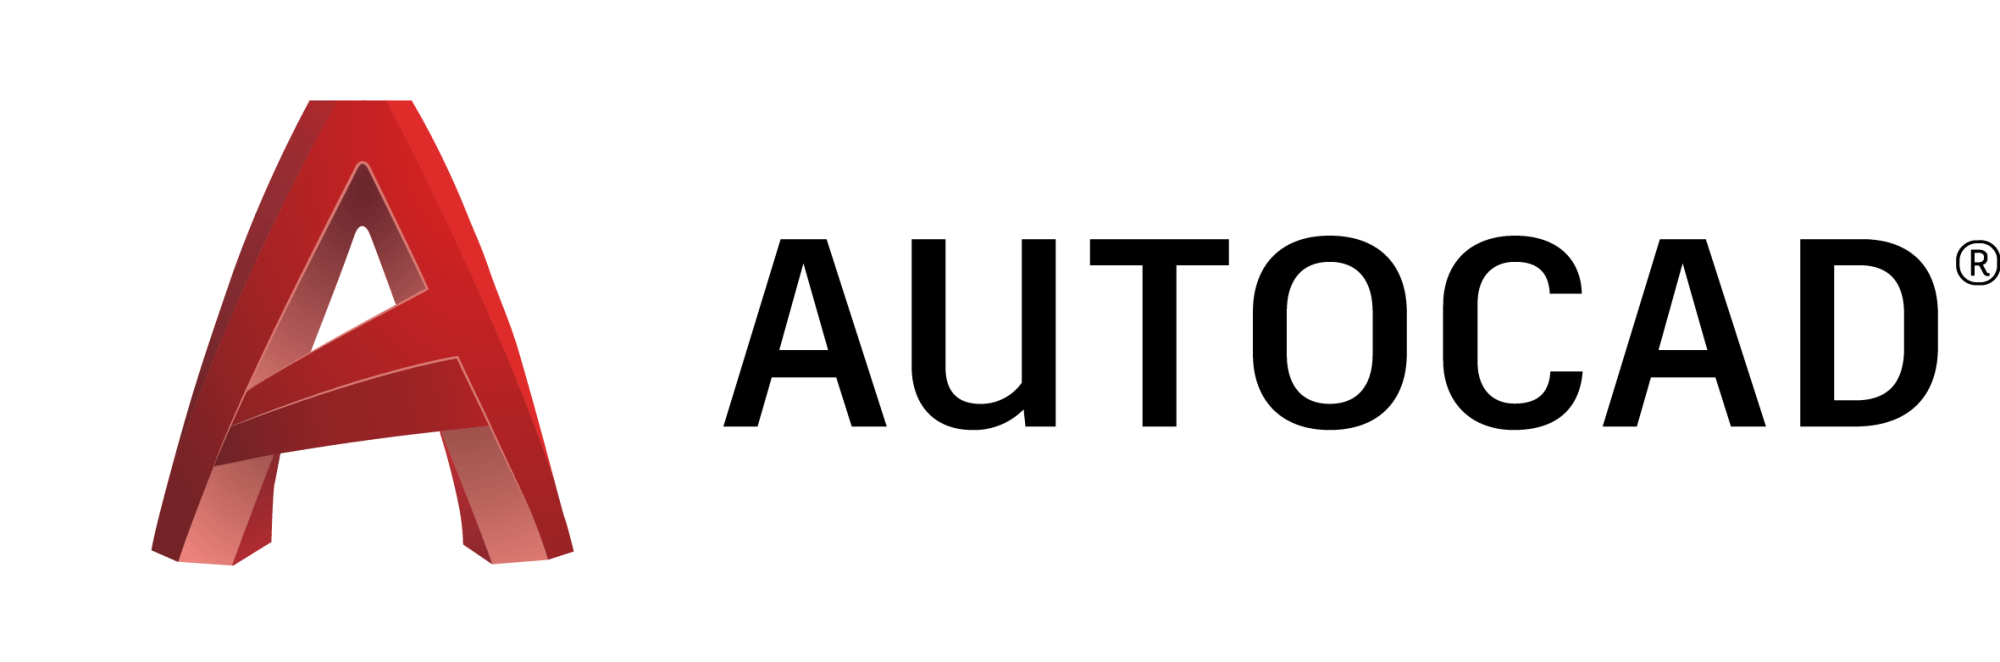 autocad-logo.png